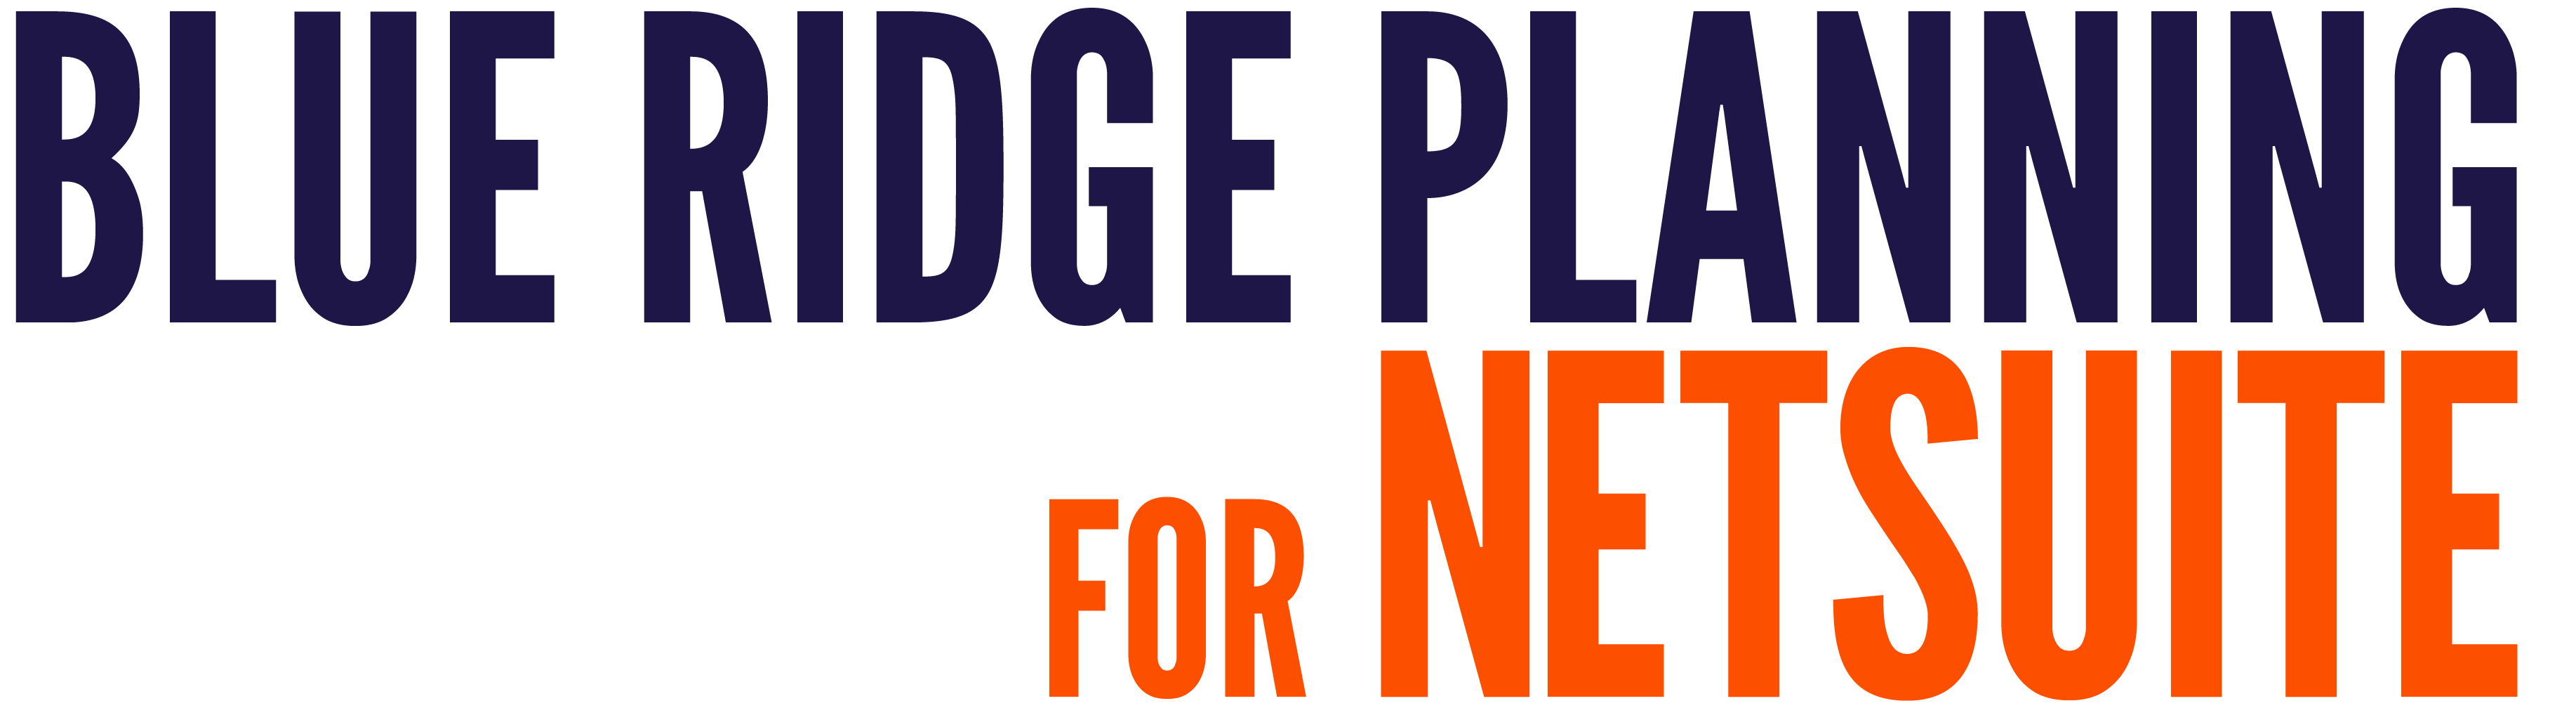 Blue Ridge Planning for NetSuite